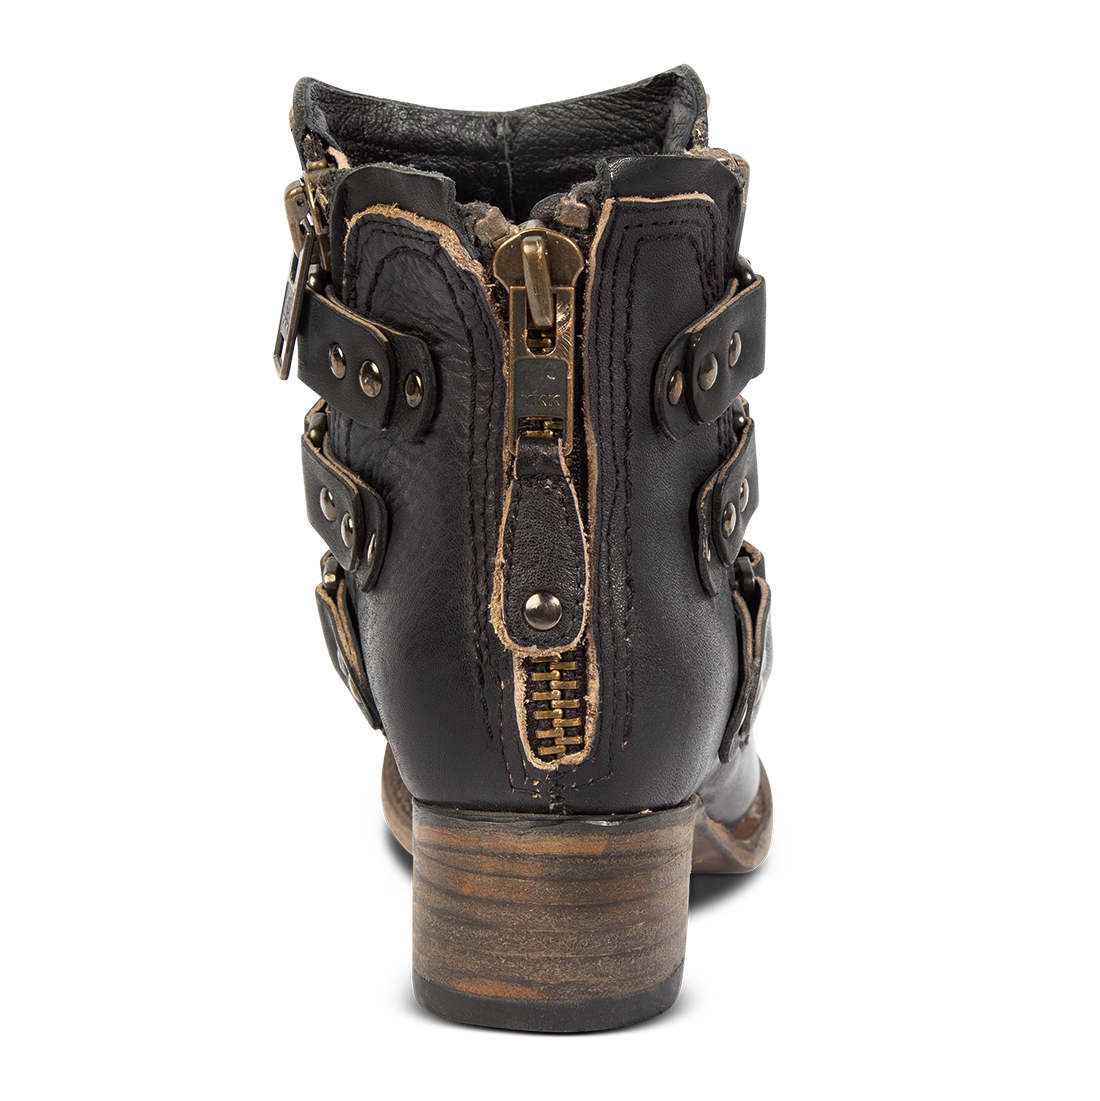 Back view showing block heel and heel brass zip closure on Freebird women's Grecko black leather ankle bootie